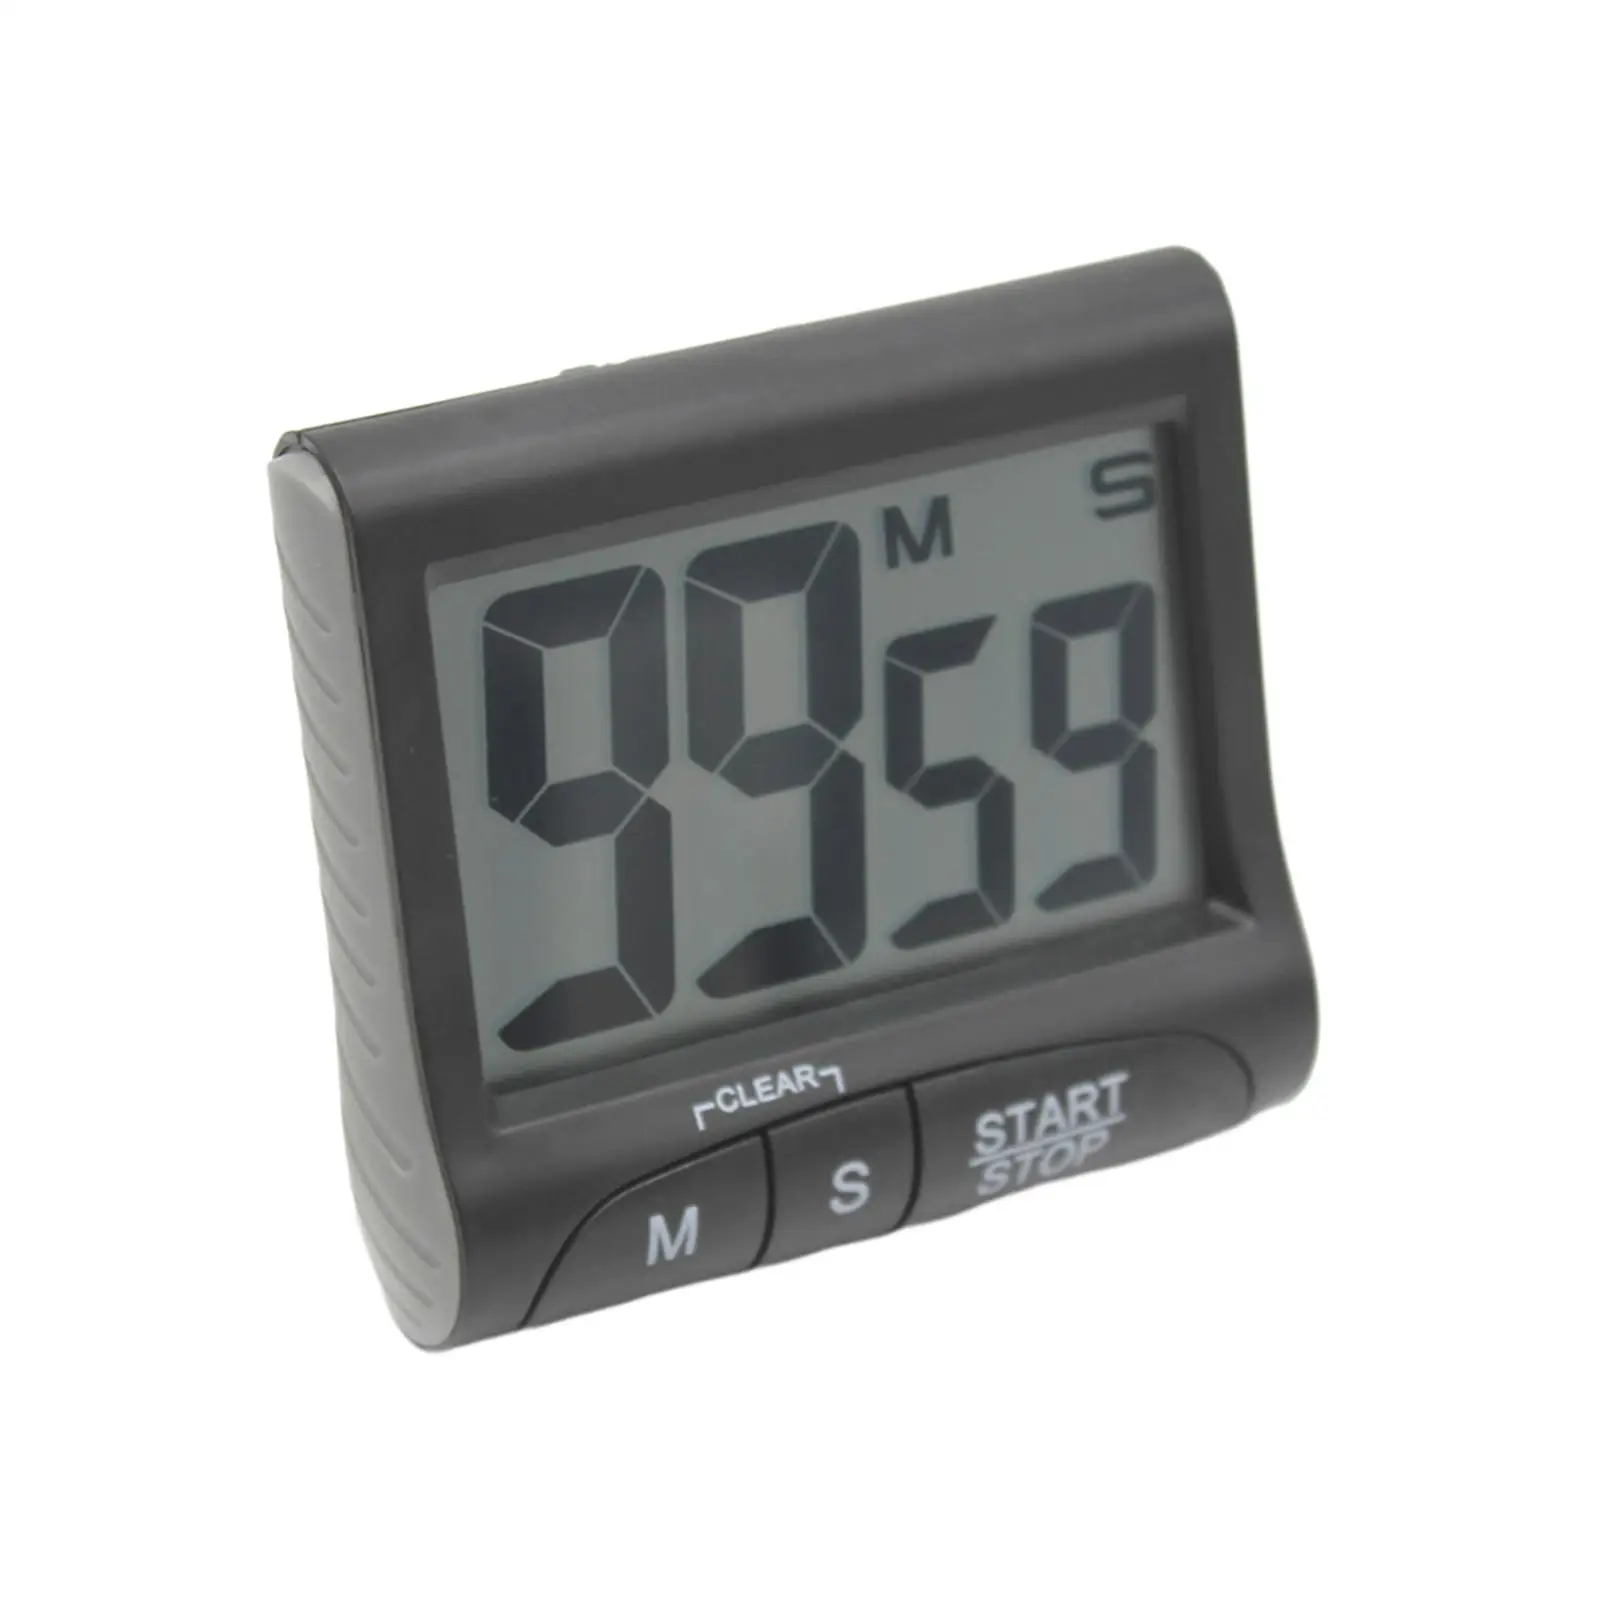 Countdown Timer Clock Large LCD Display Loud Alarm Cooking Timer Digital Timer for Game Games Baking Exercising Studying